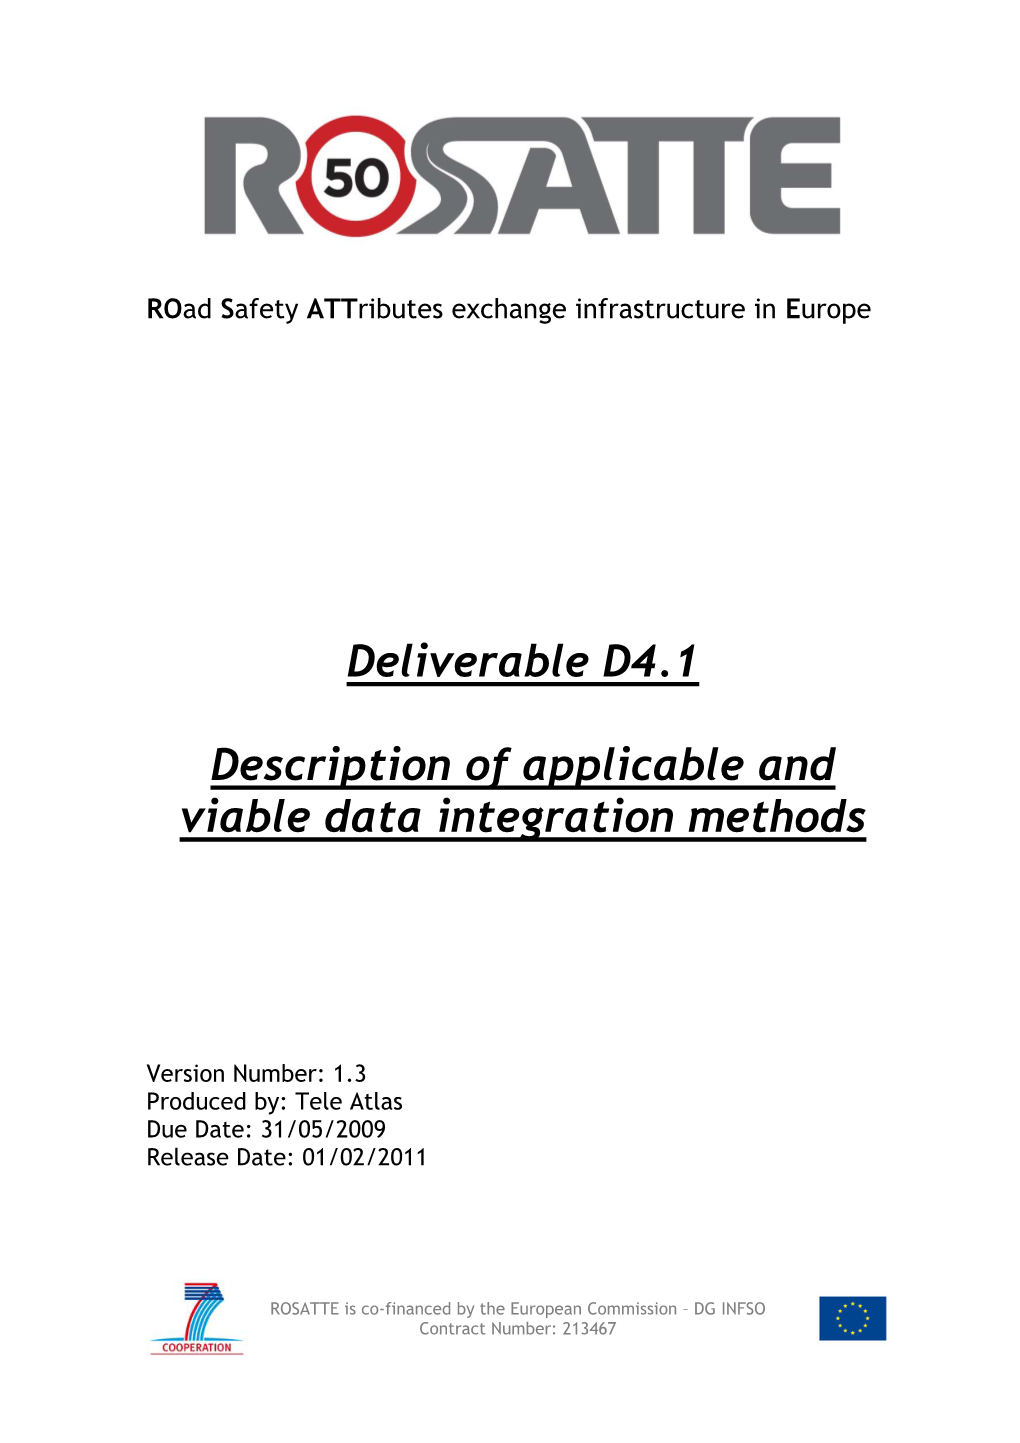 Deliverable D4.1 Description of Applicable and Viable Data